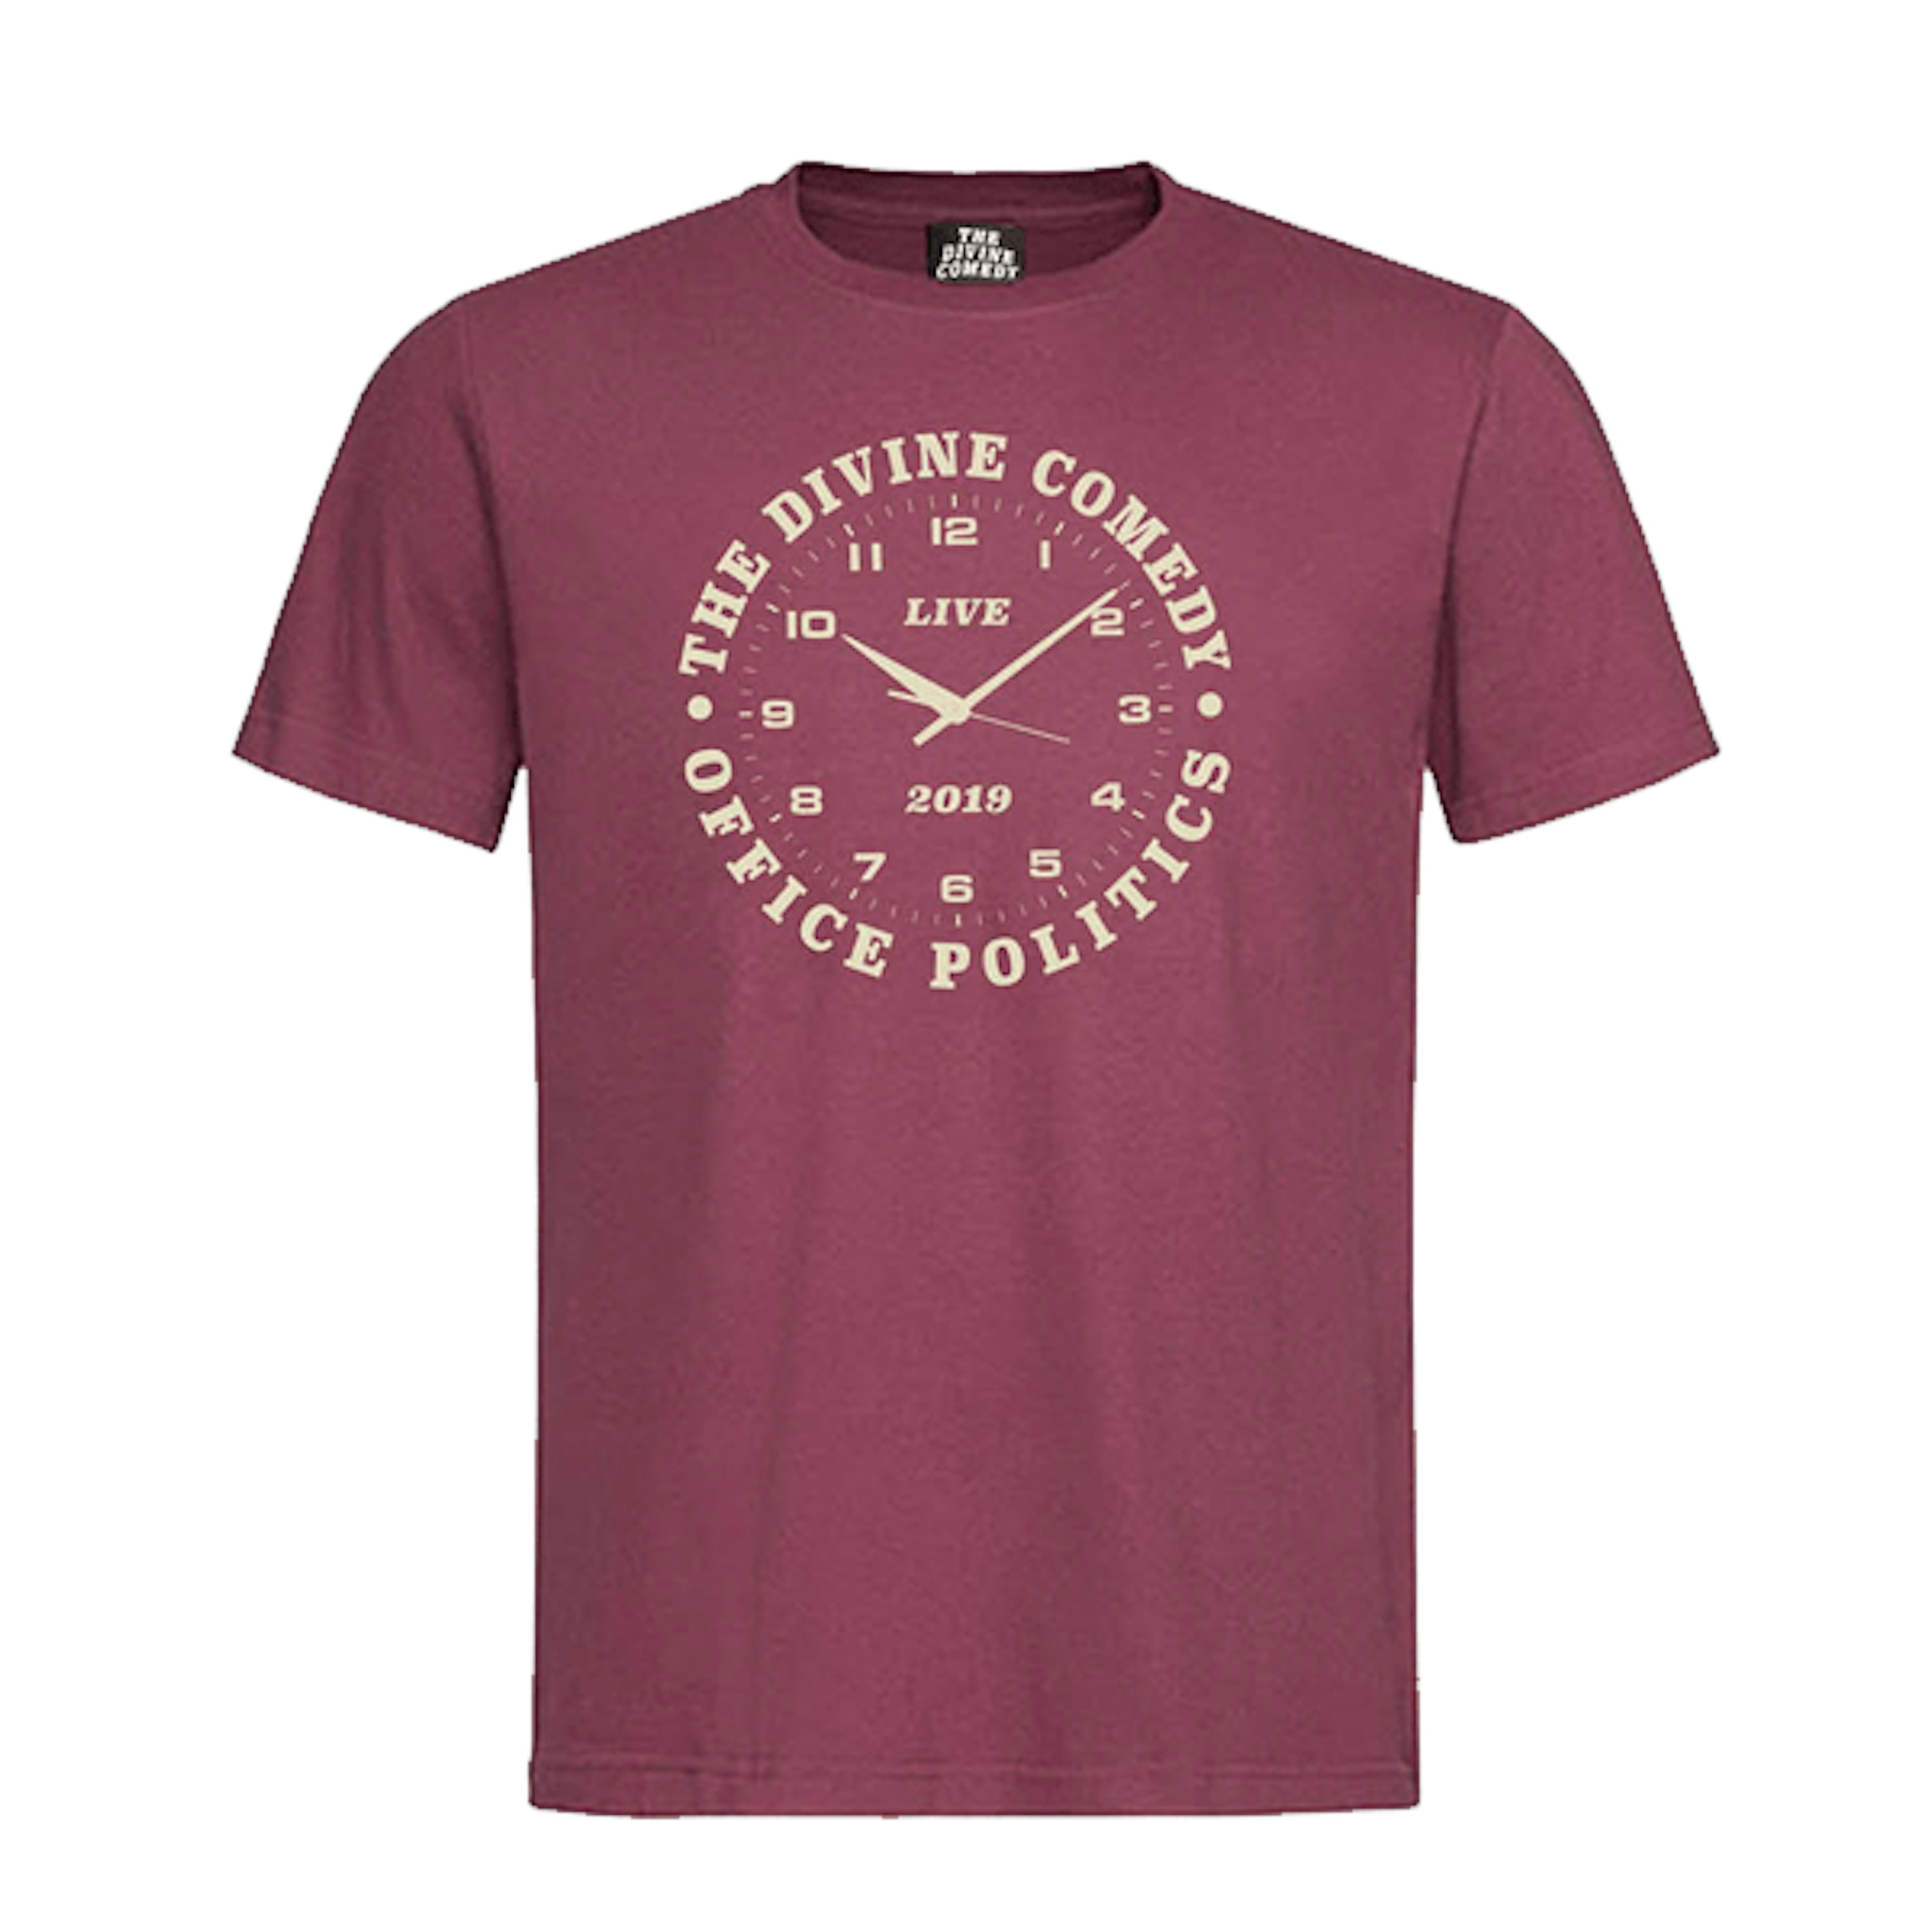 The Divine Comedy Office Politics Tour T-Shirt (Burgundy)